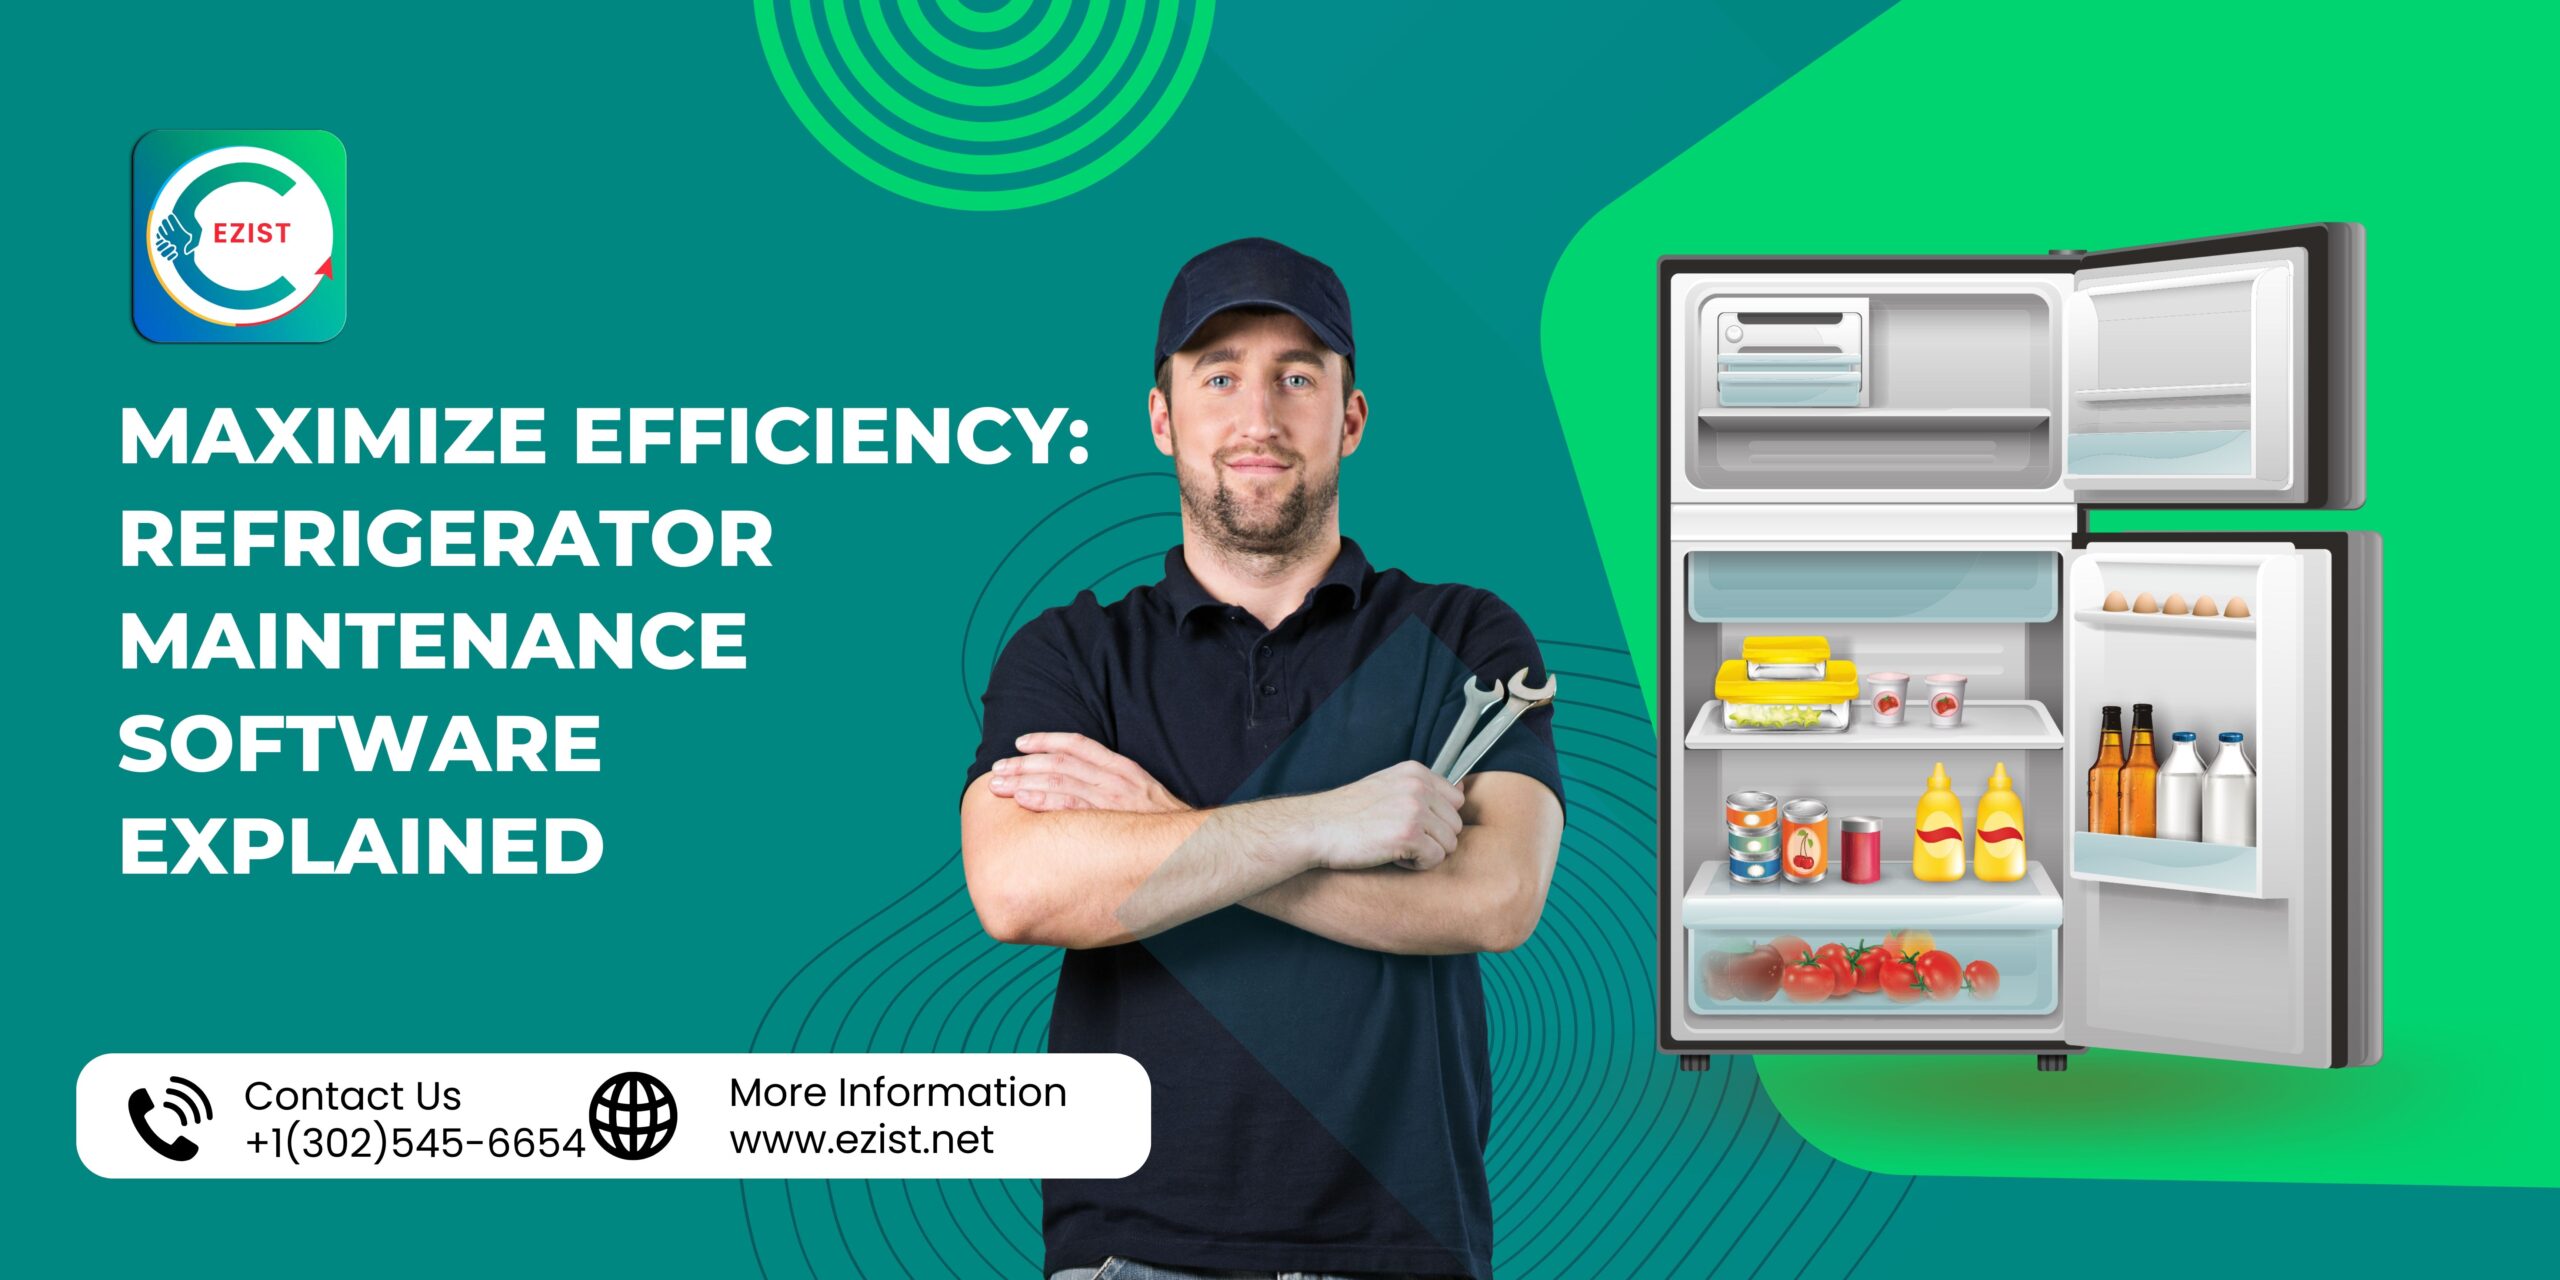 Maximize Efficiency: Refrigerator Maintenance Software Explained